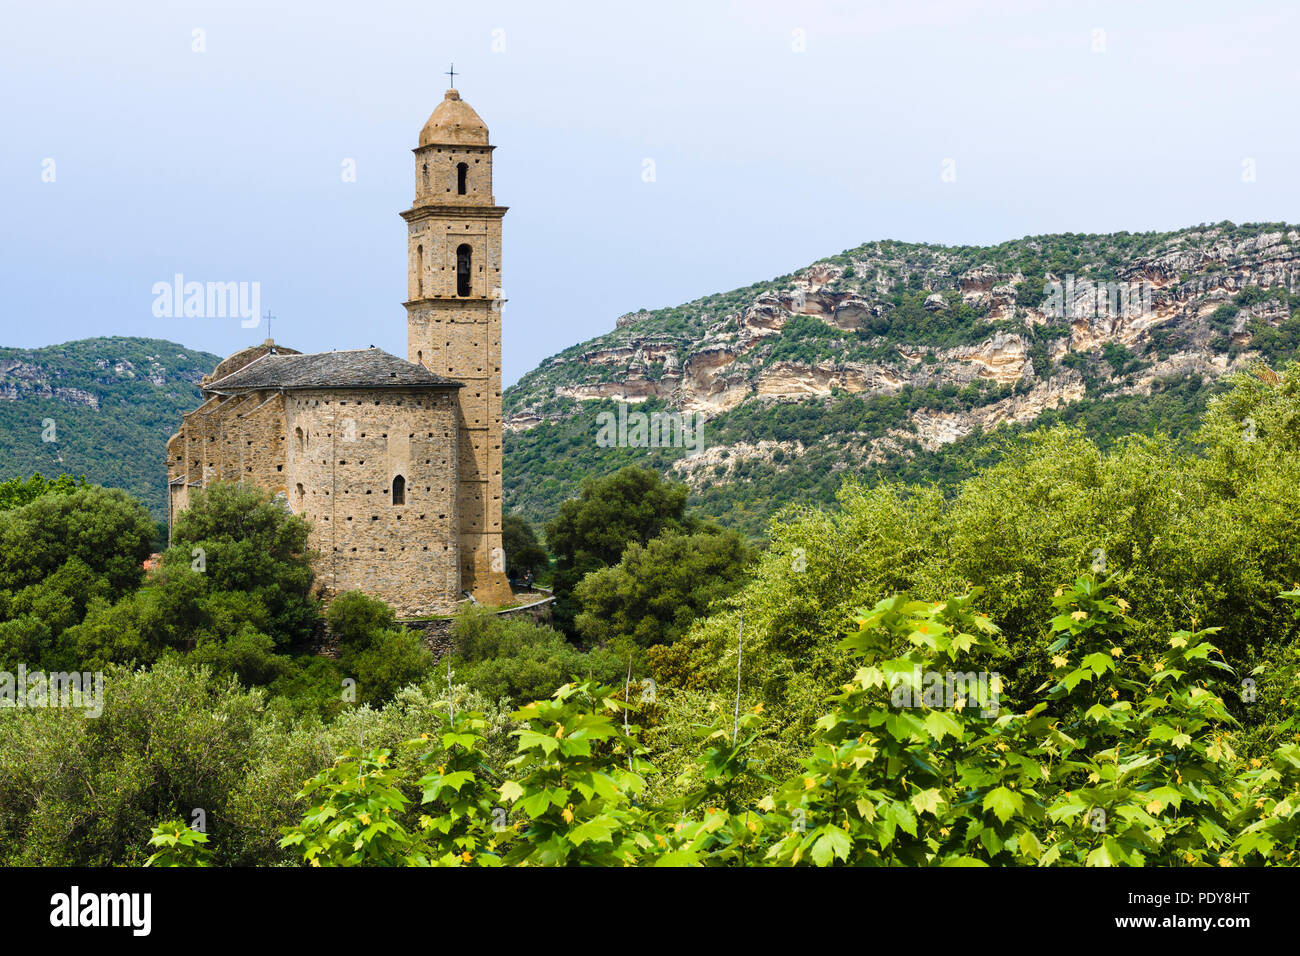 San Martinu (Saint Martin's) Church, Patrimonio, Cap Corse, Corsica, France Stock Photo